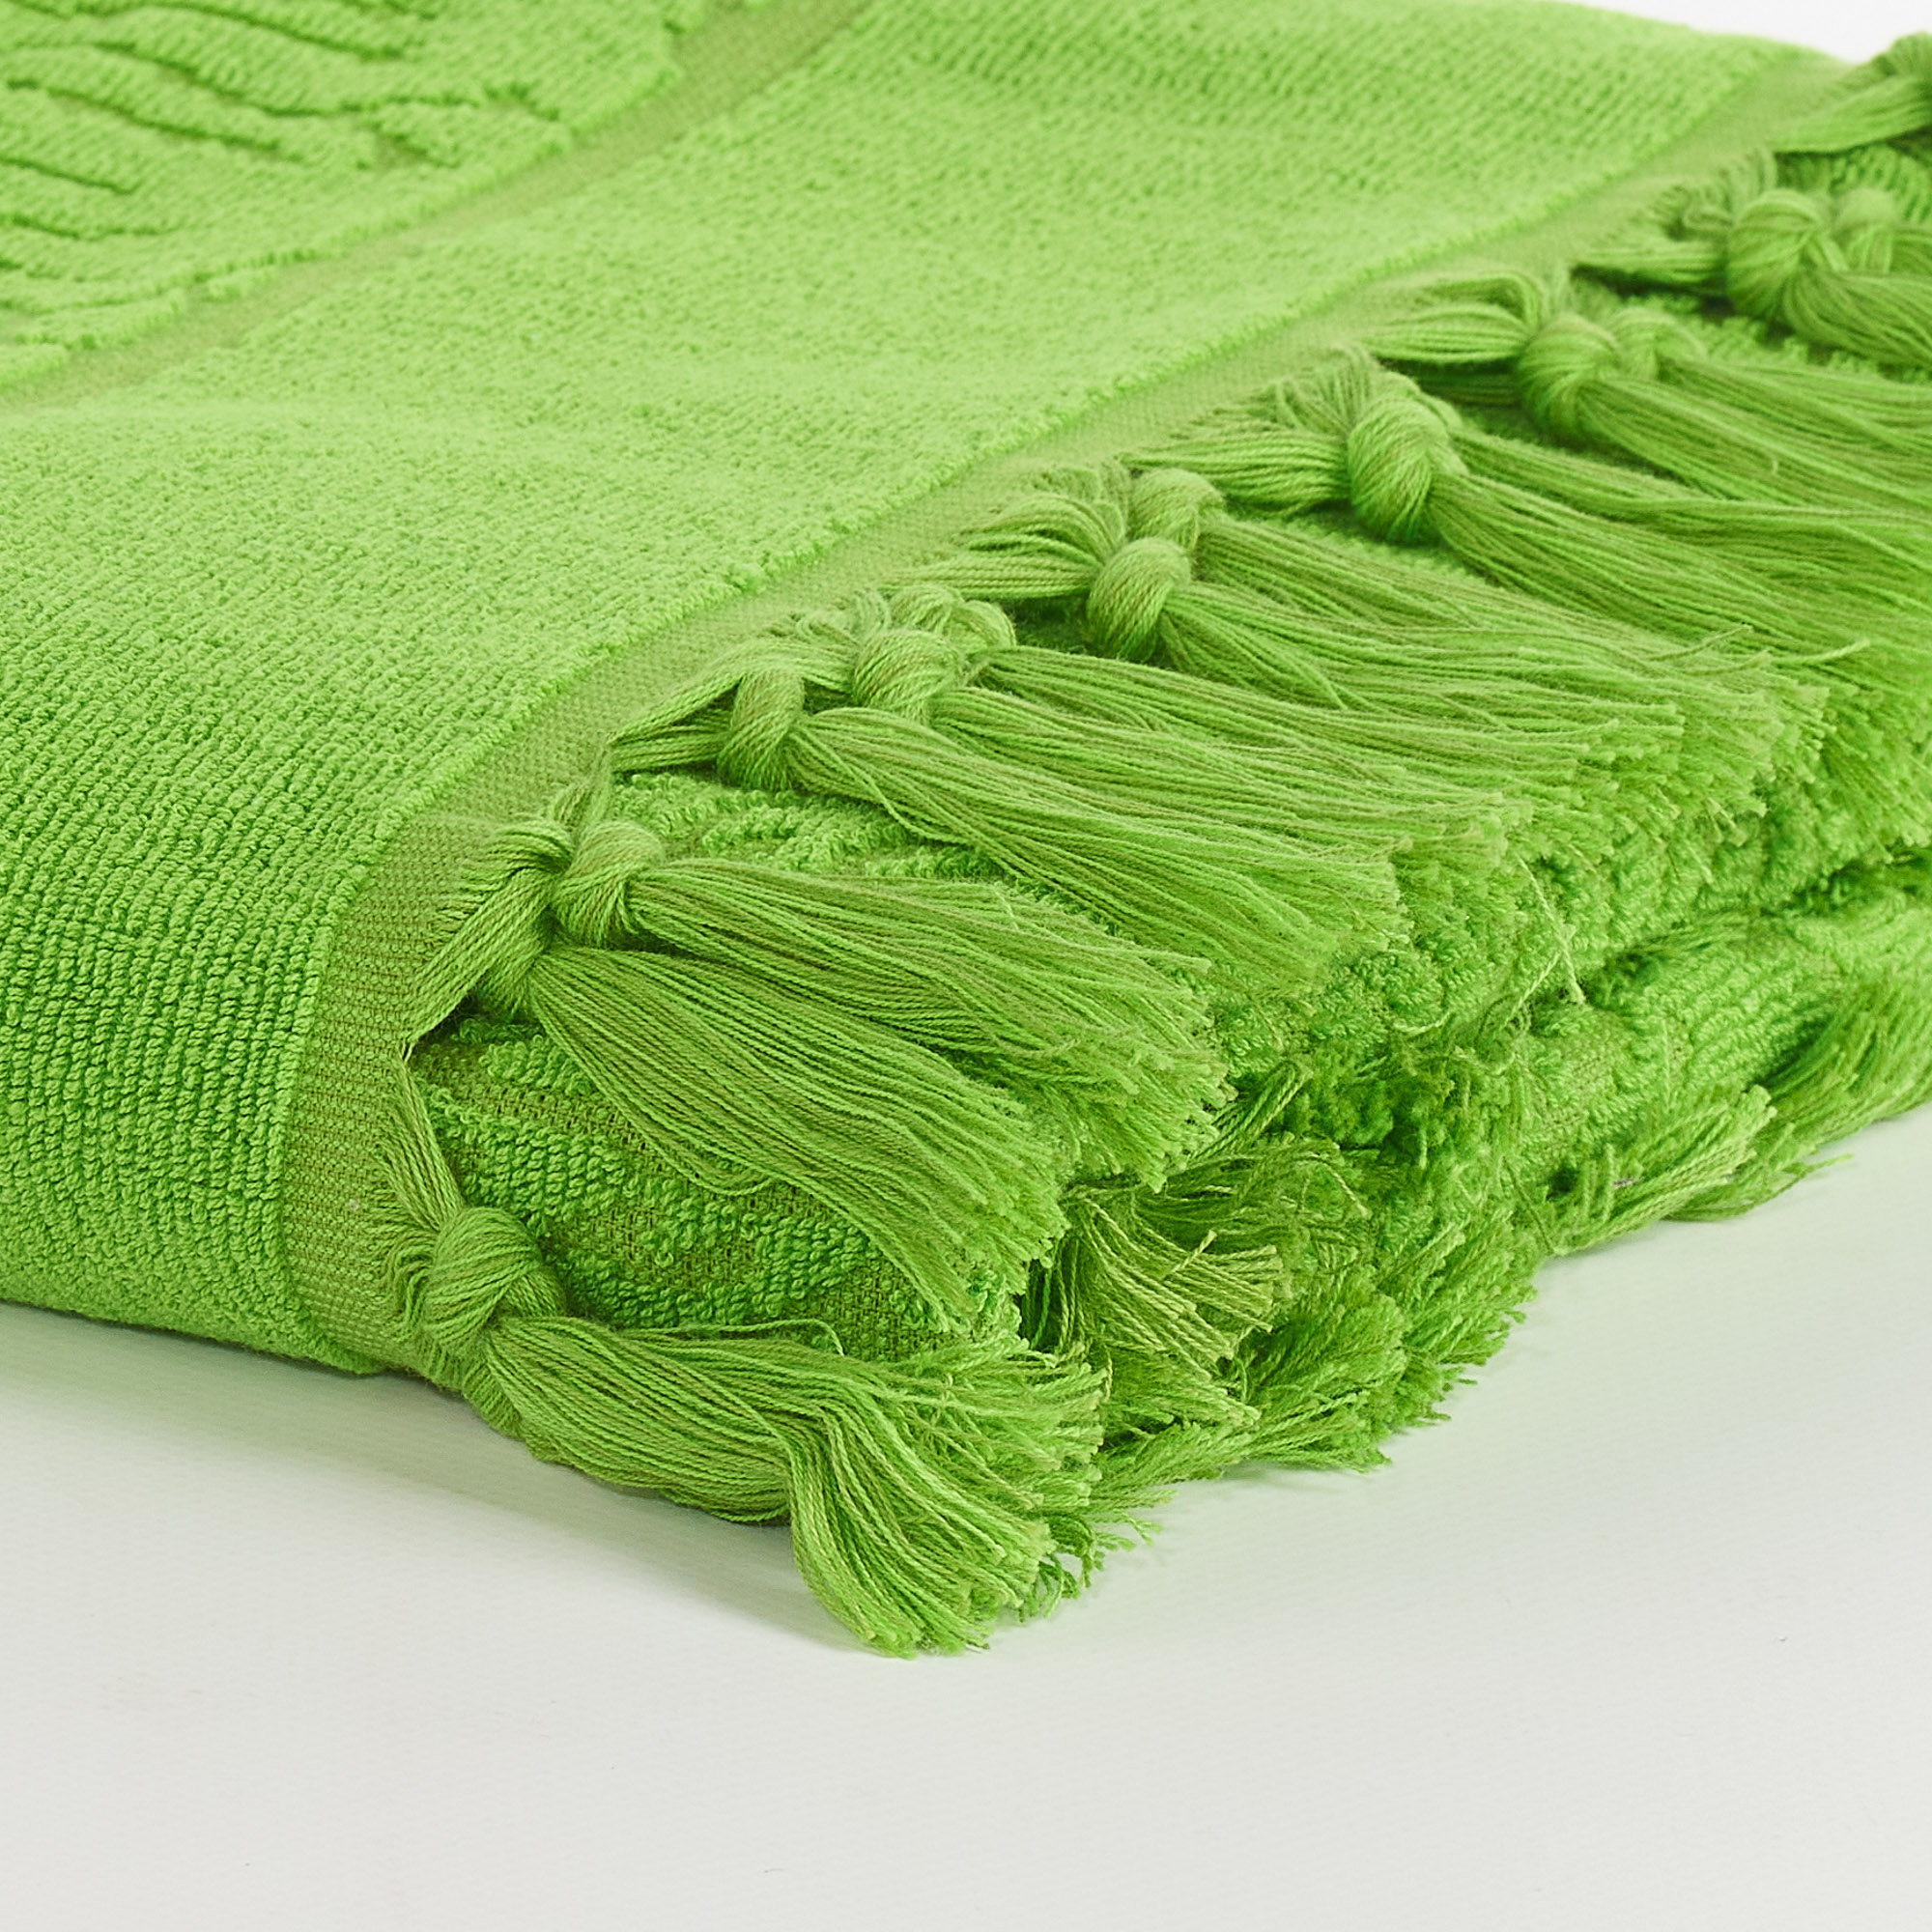 Corallia microsponge beach towel verde Maè